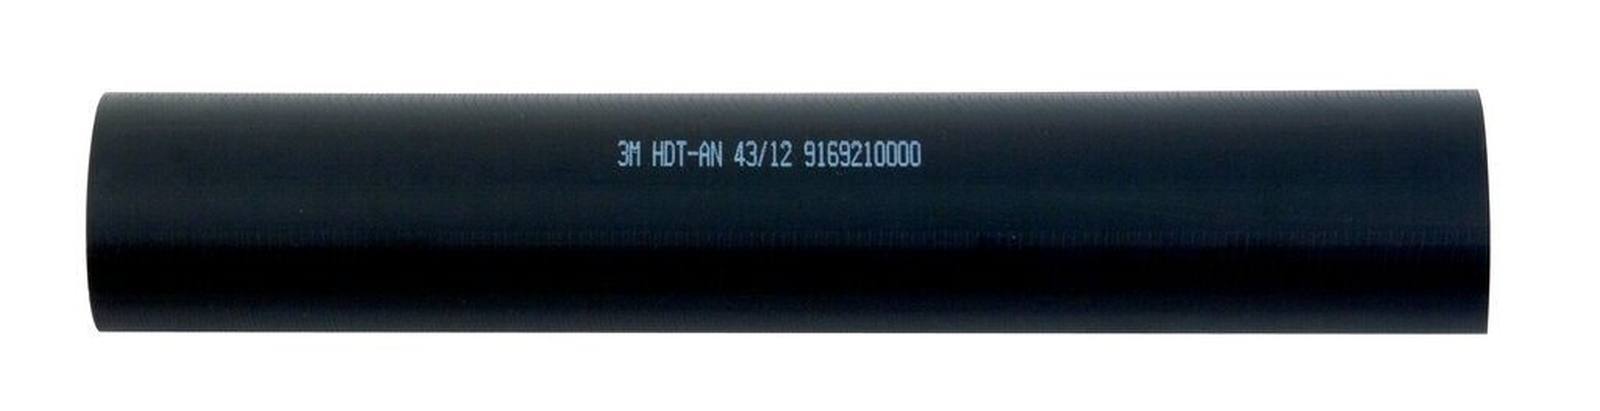 3M HDT-AN Tubo termorretráctil de pared gruesa con adhesivo, negro, 43/12 mm, 1 m